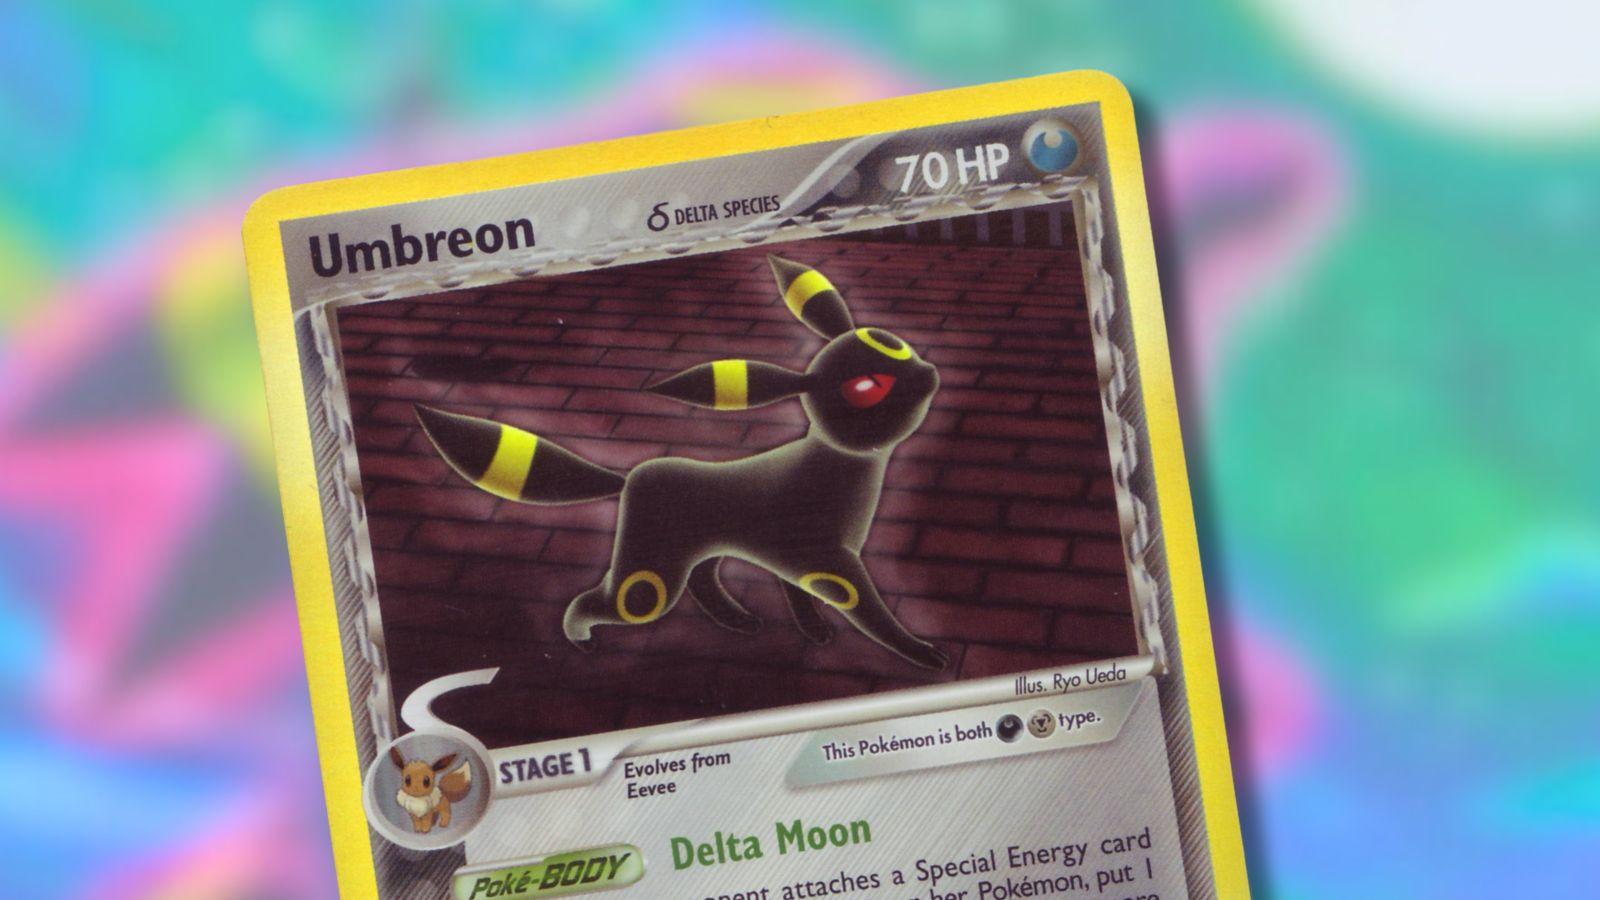 Umbreon Delta Pokemon card with Moonbreon background.